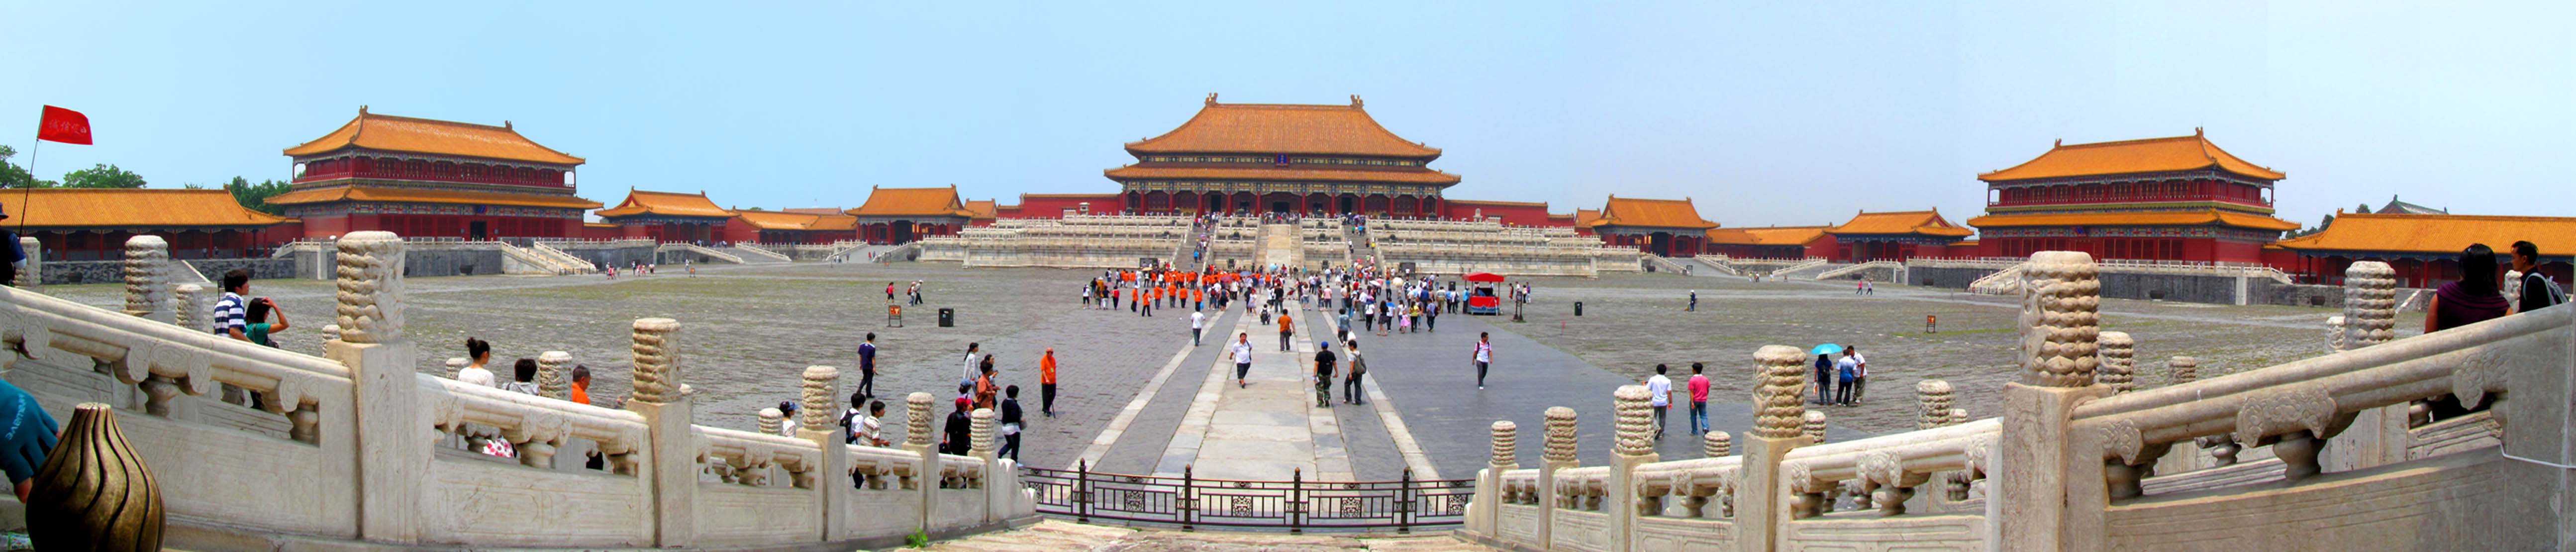 West Watchtower of the Forbidden City (Palace Museum), Beijing, China загрузить